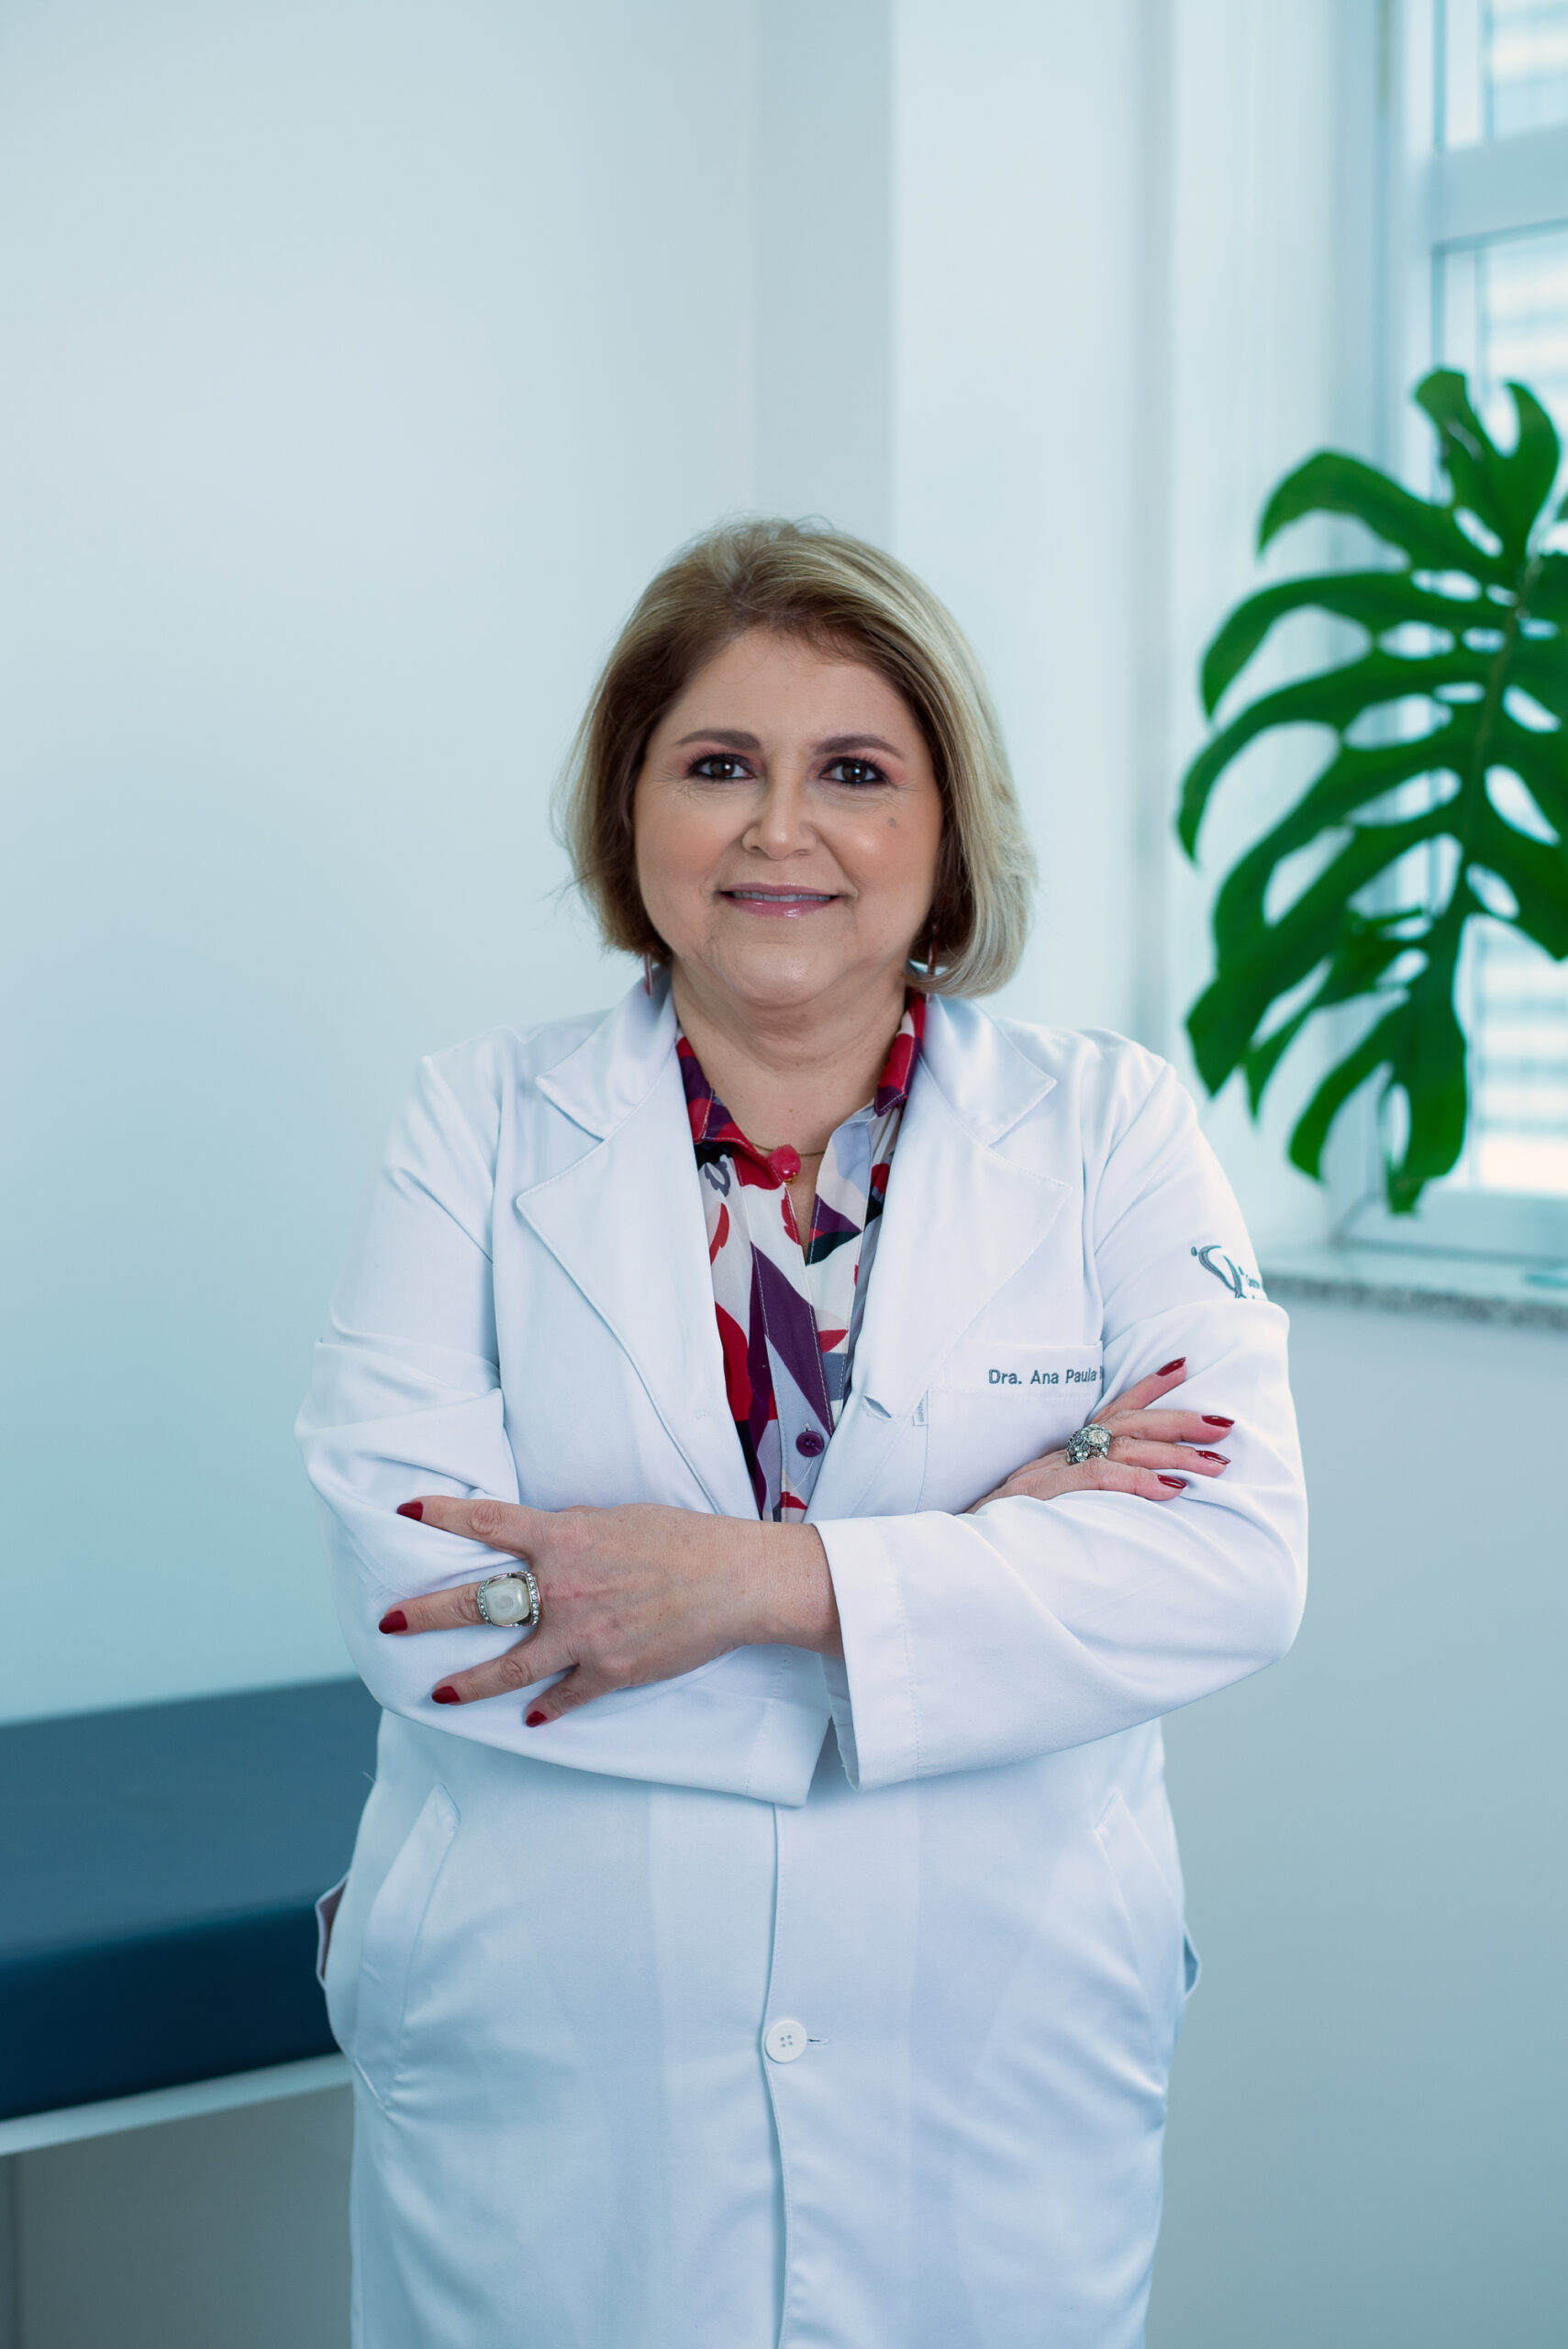 Dra. Ana Paula Bazilio